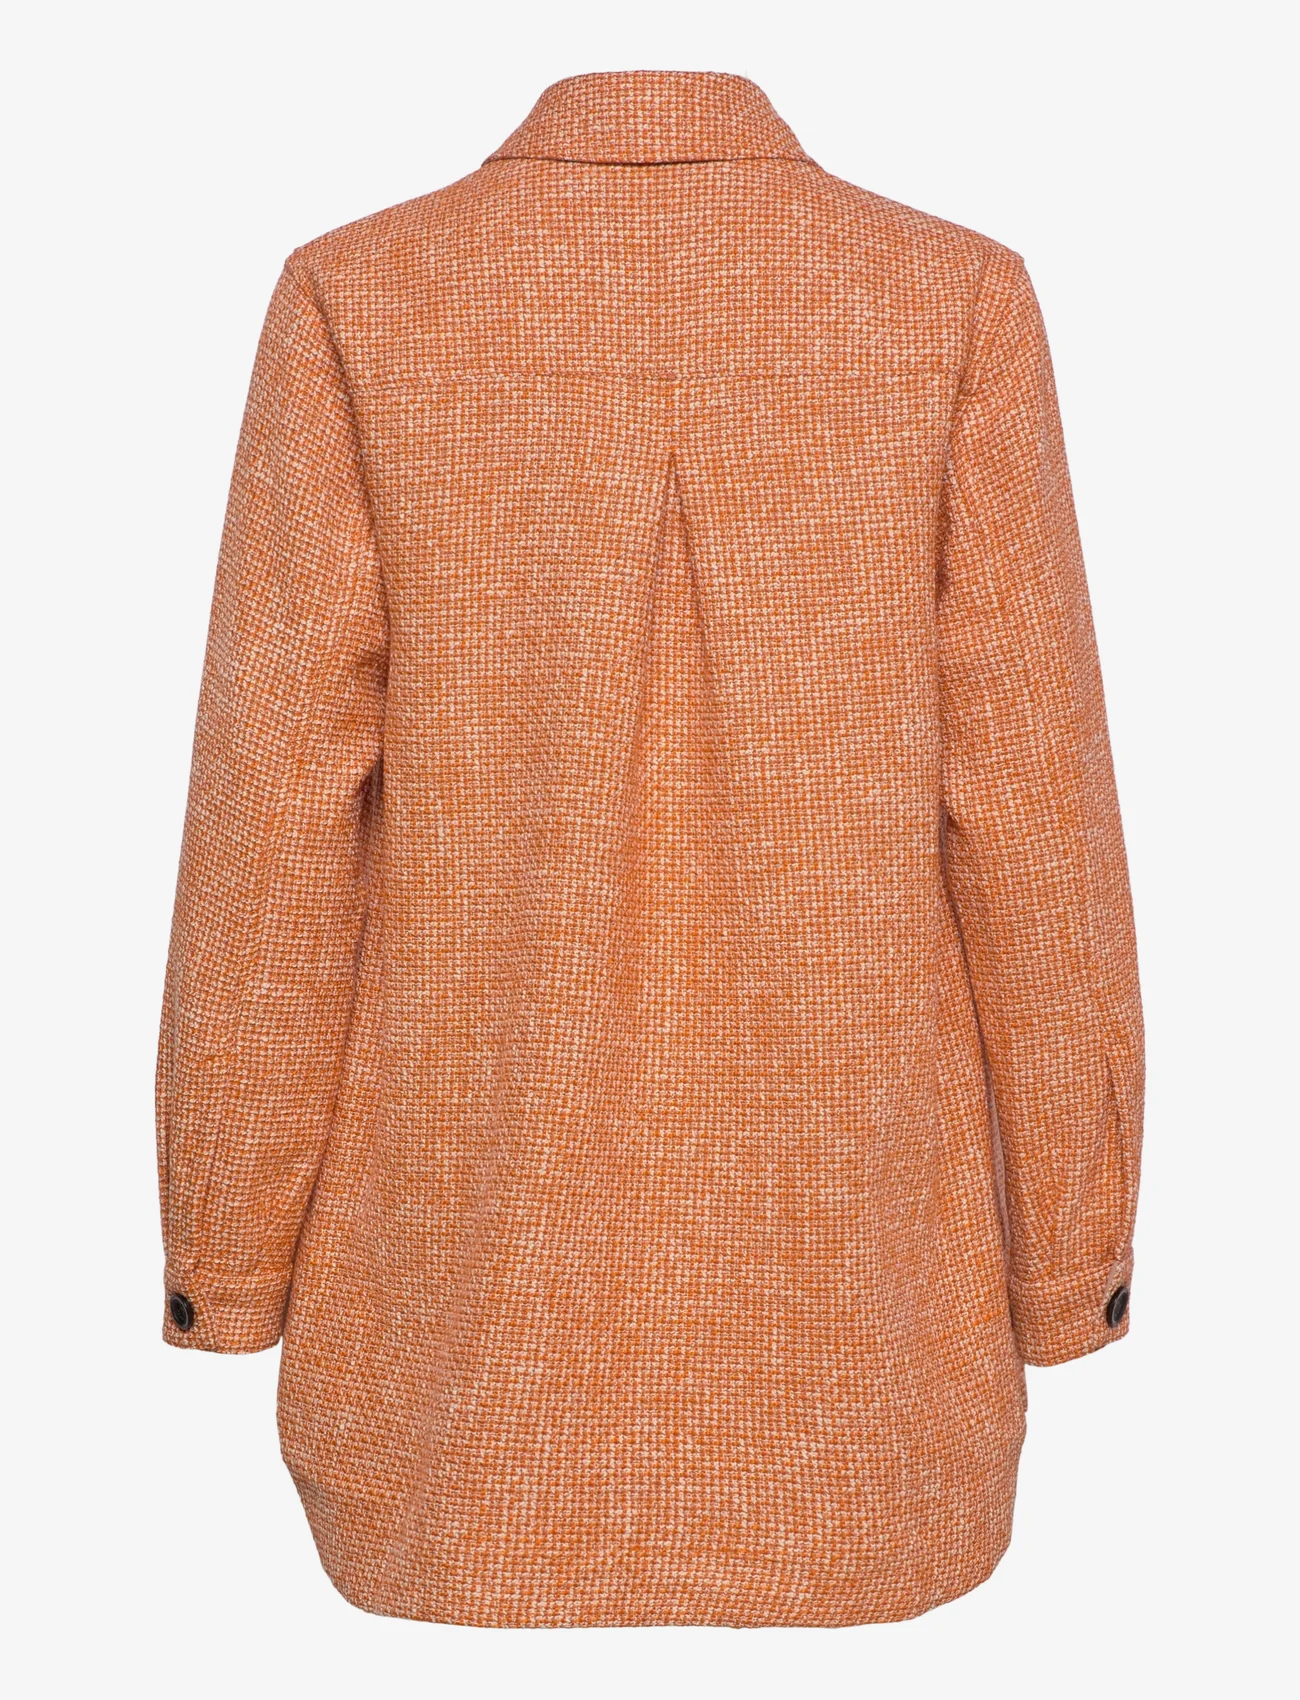 MOS MOSH - Rian Aletta Shirt Jacket - dames - harvest pumpkin melange - 1